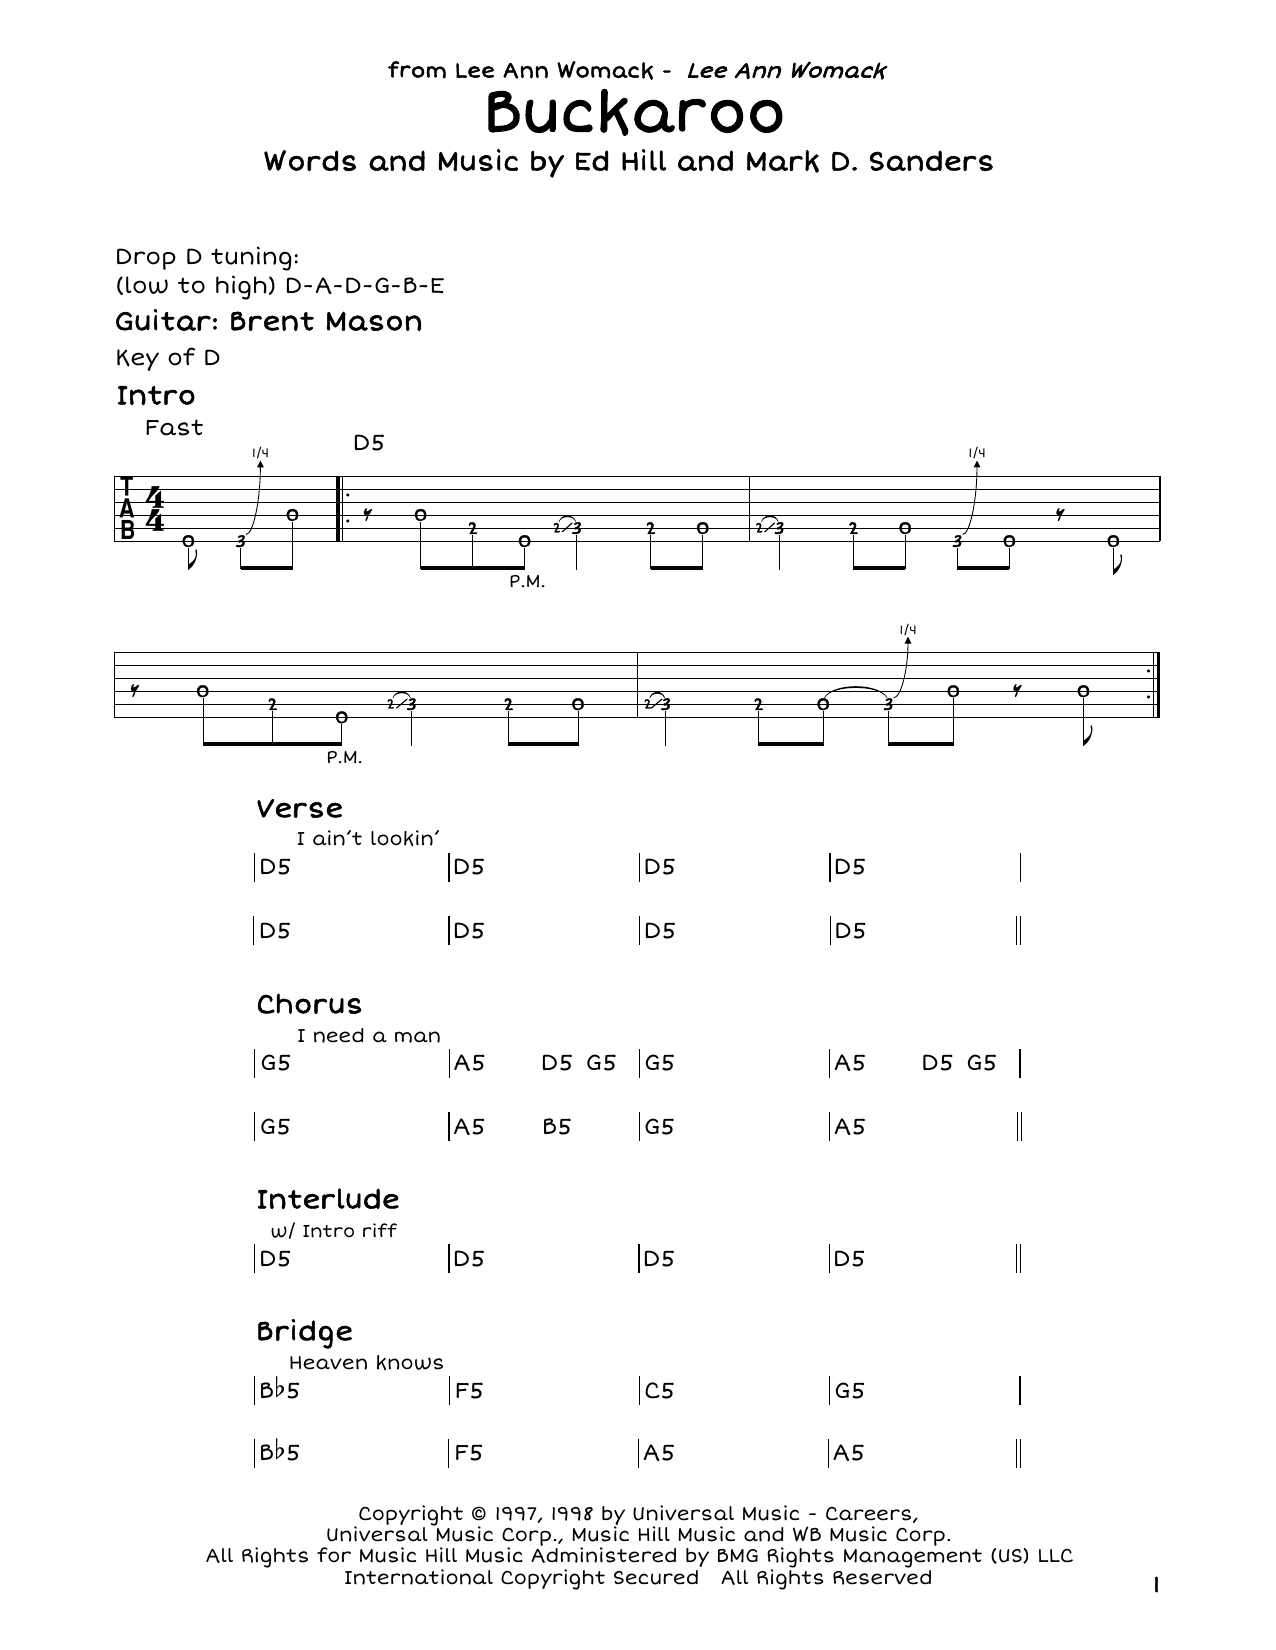 Lee Ann Womack Buckaroo Sheet Music Notes & Chords for Guitar Tab - Download or Print PDF